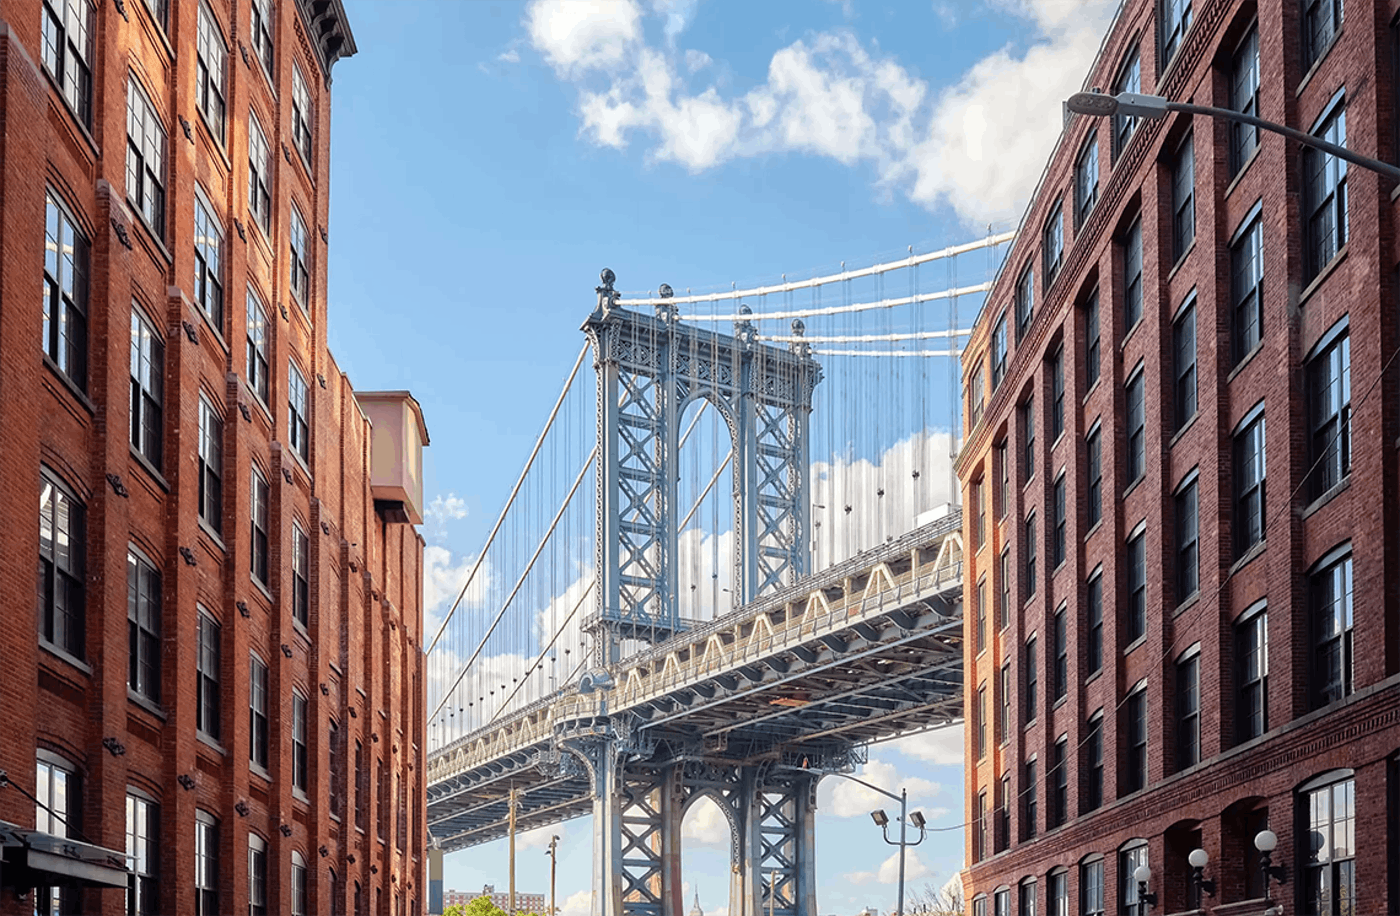 A view of the Manhattan Bridge in DUMBO, Brooklyn